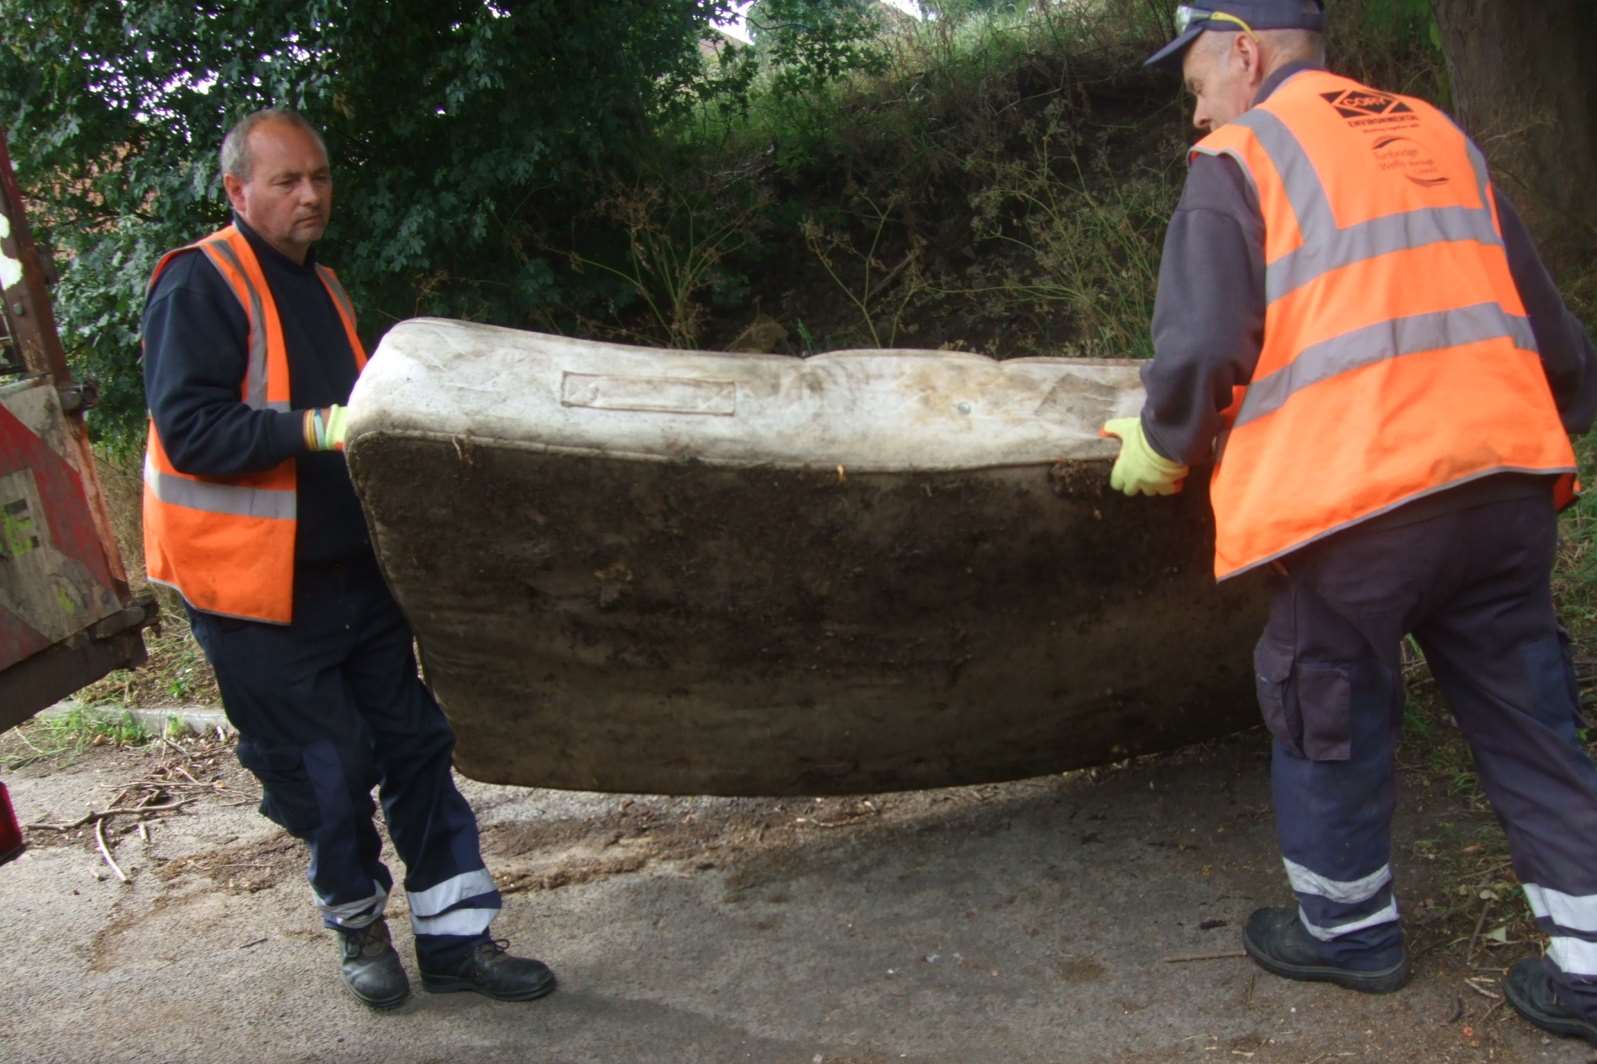 Member of the Tunbridge Wells Council street cleaning team remove a dumped mattress